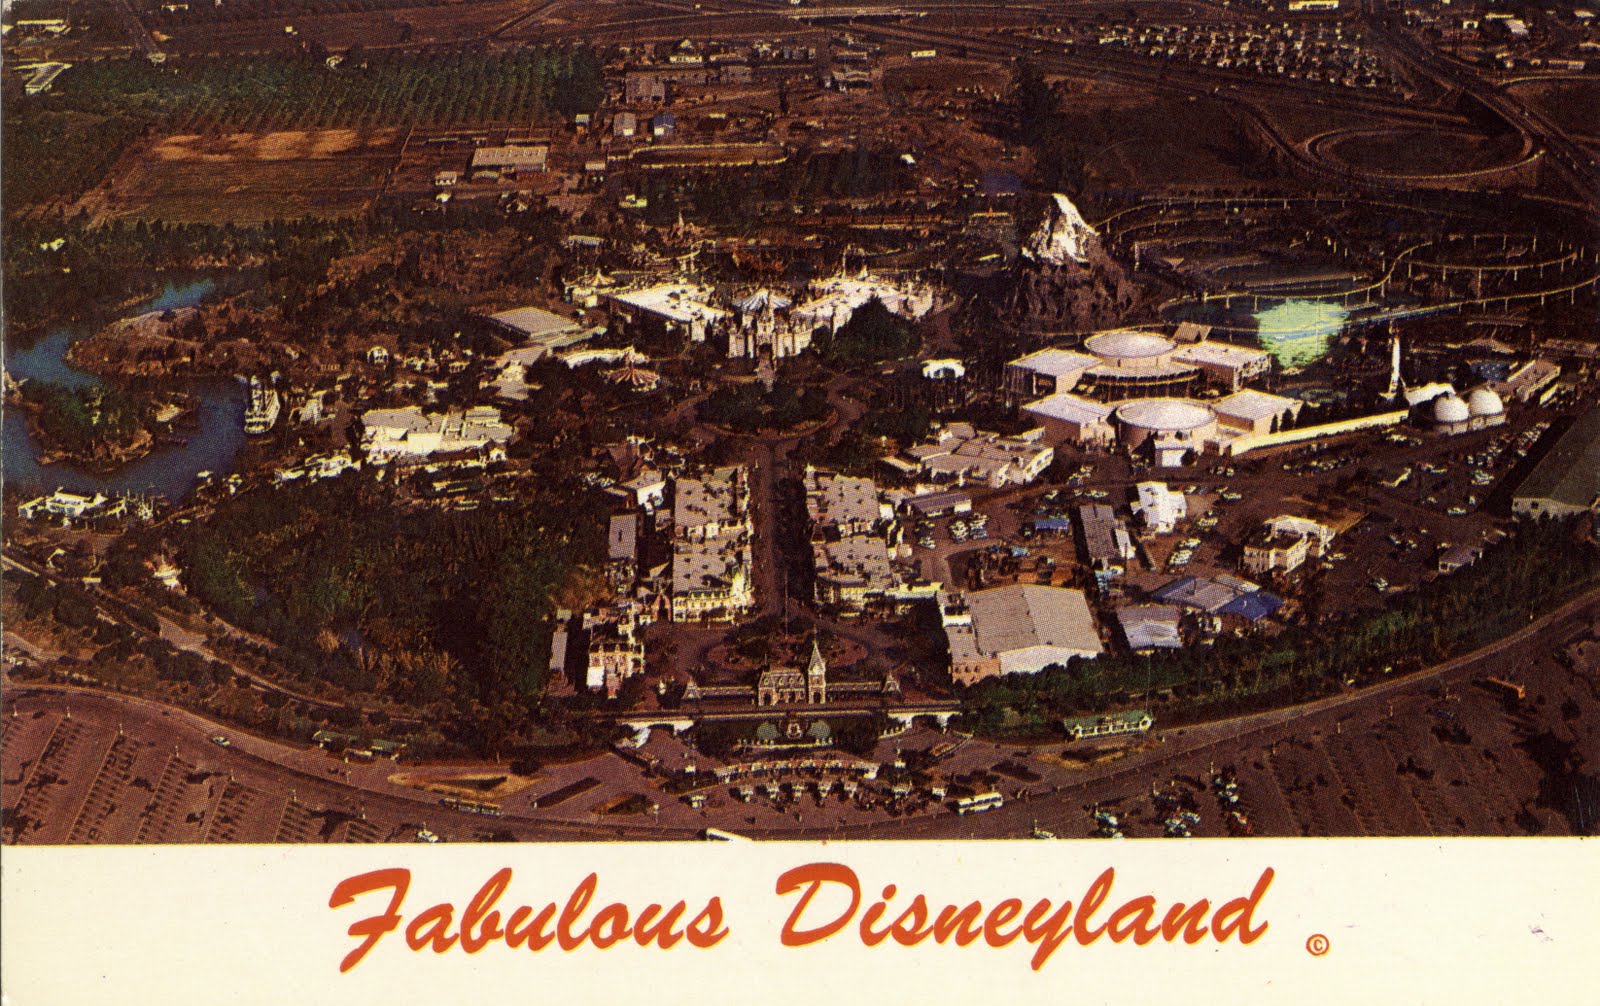 Vintage Disneyland Tickets: Disneyland Postcard - July 1962